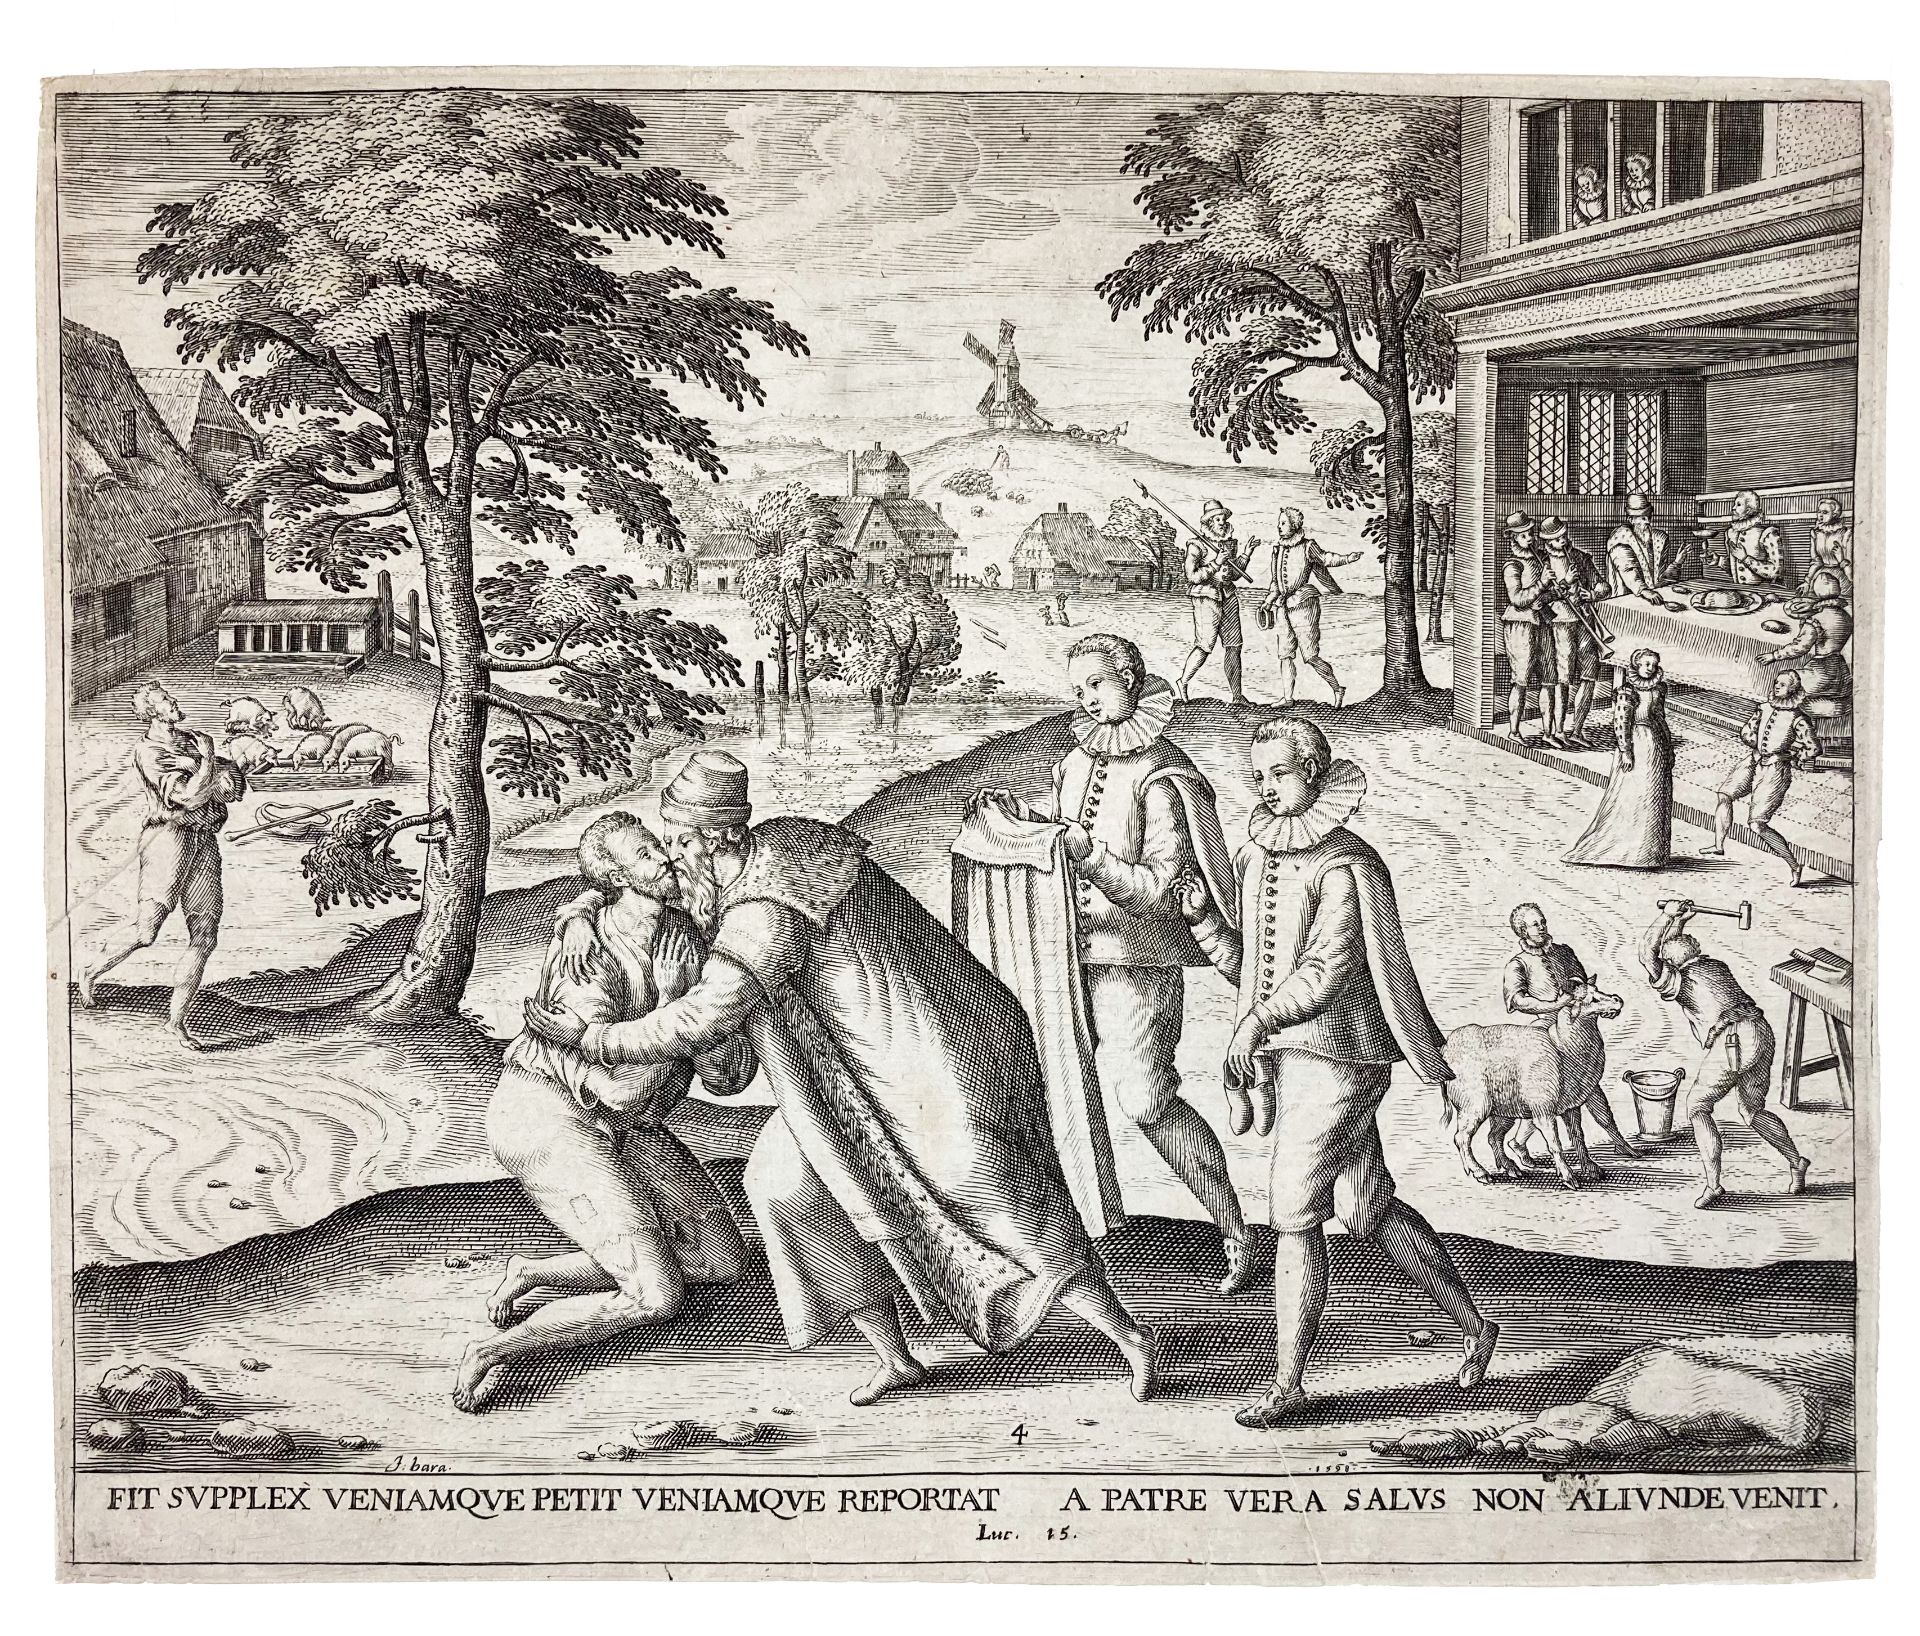 BARA/BARRA, Johan (1581-1634). "Fit supplex veniamque petit veniamque reportat a patre